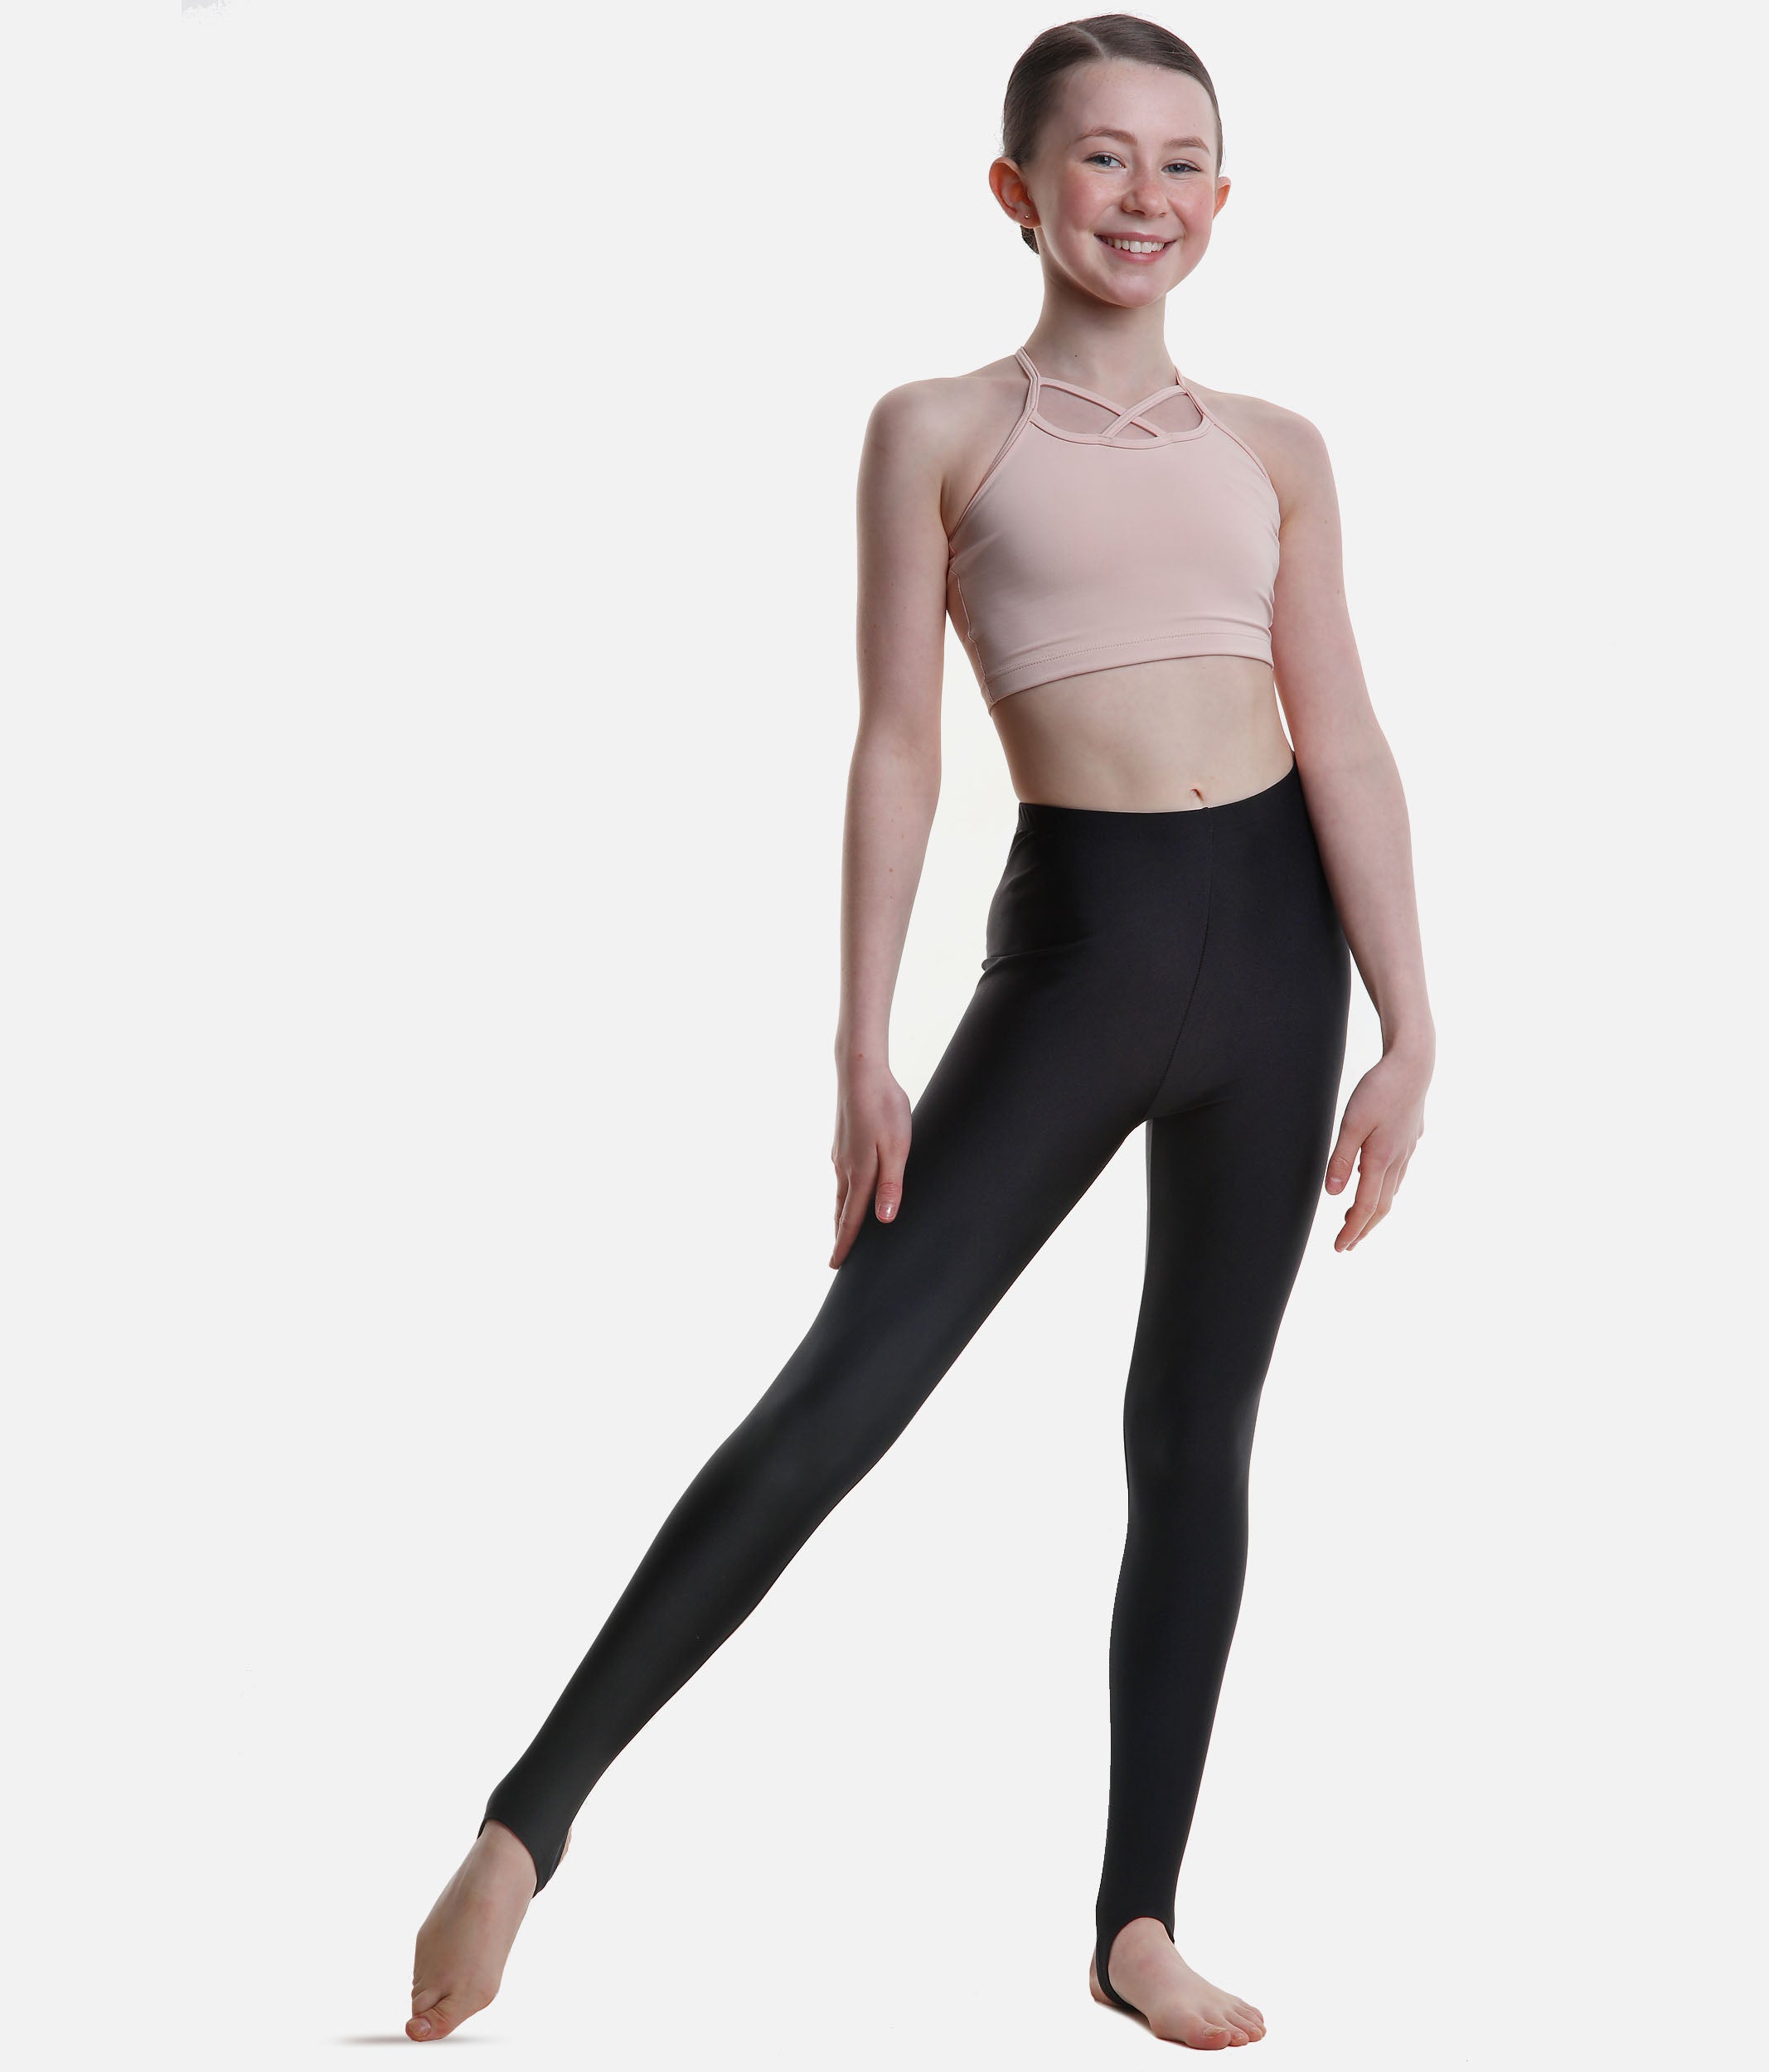 Roch Valley Micro Shorts Hotpants Nylon Lycra Black Dance Gym